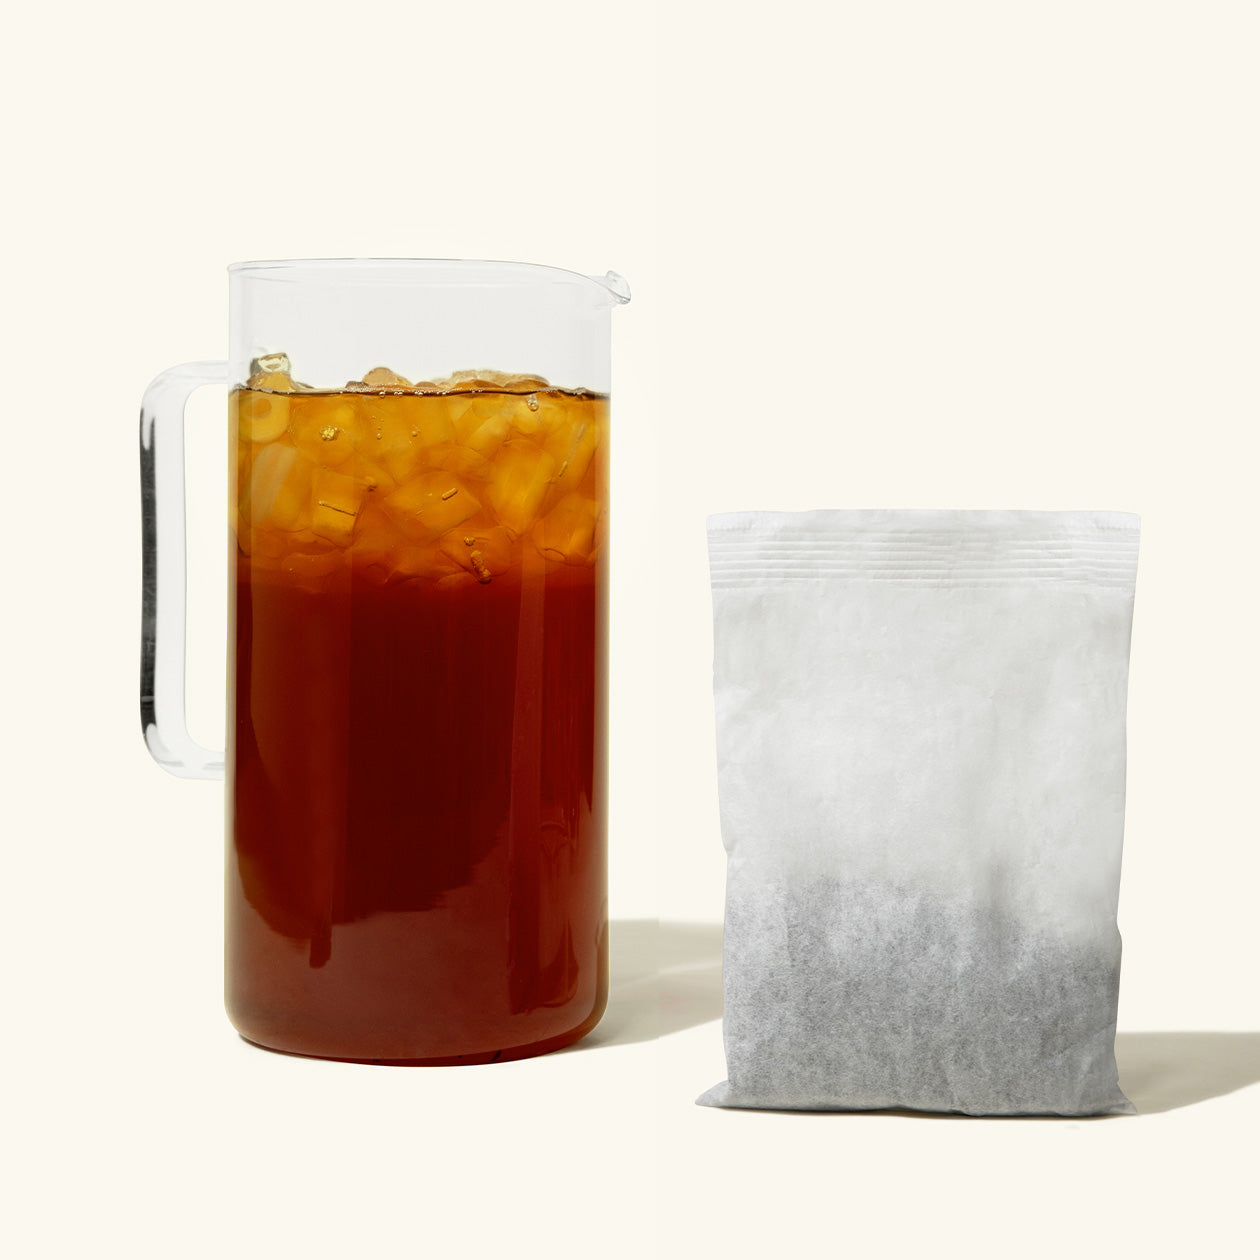 A pitcher of Numi Classic Black Iced Tea with a gallon iced tea pouch